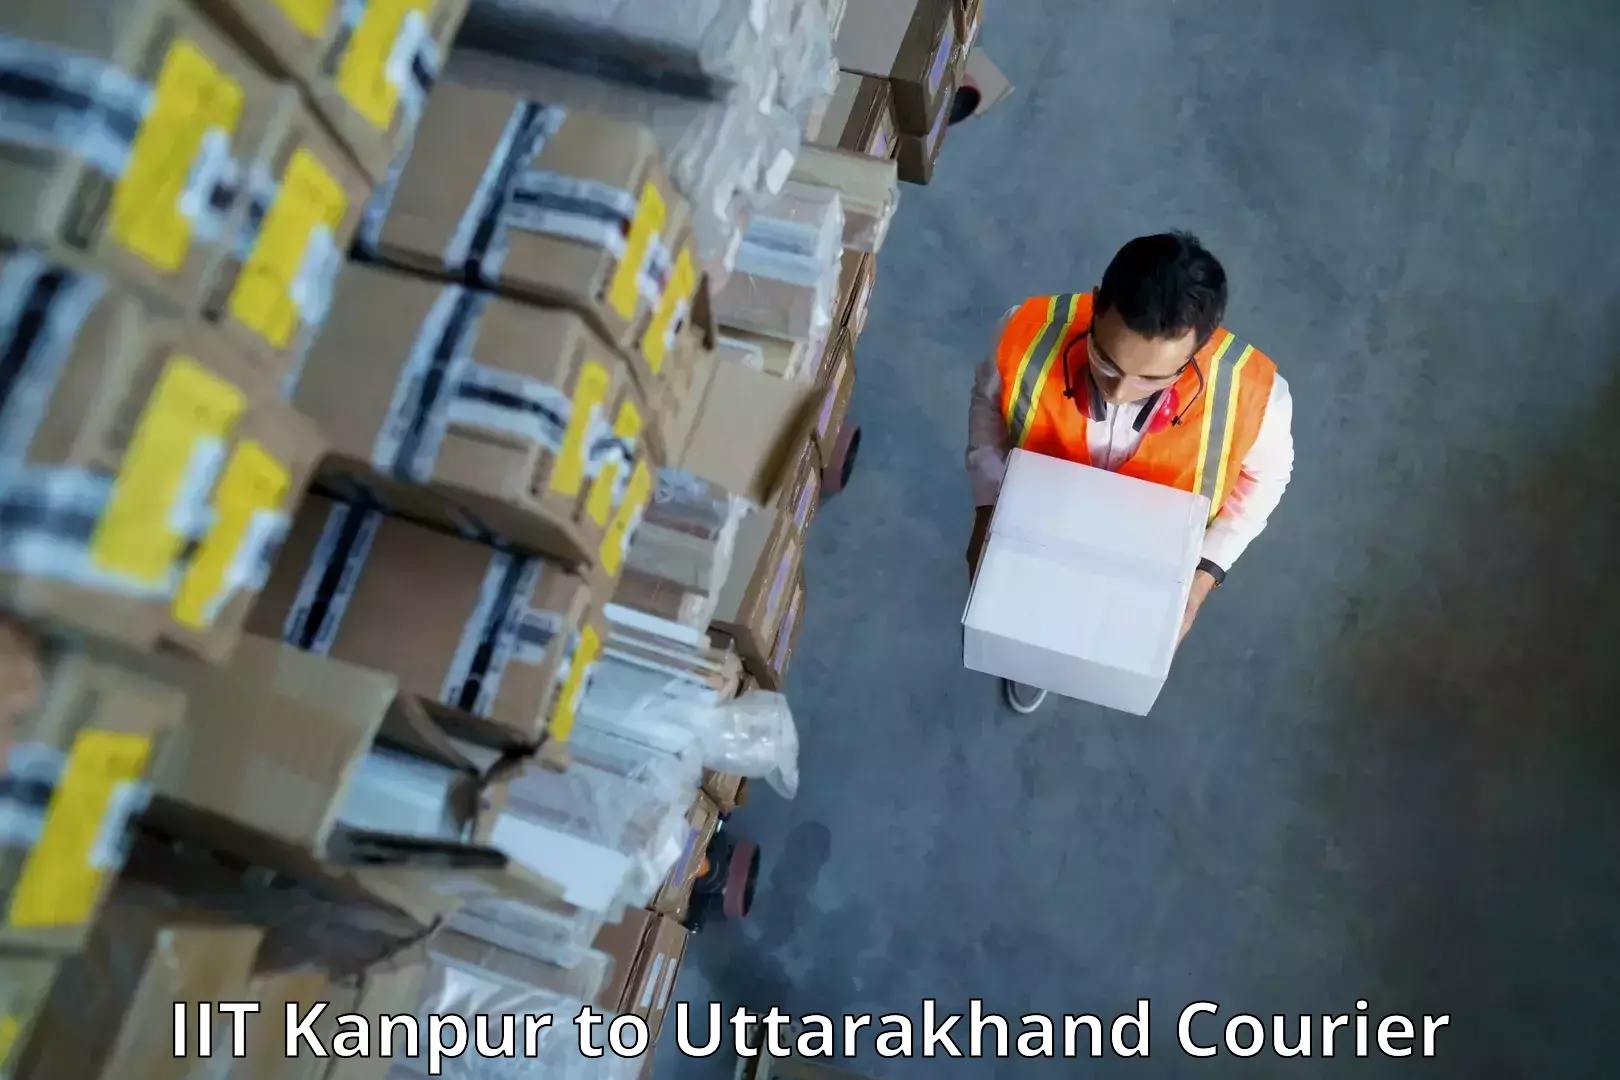 Cross-border shipping IIT Kanpur to IIT Roorkee